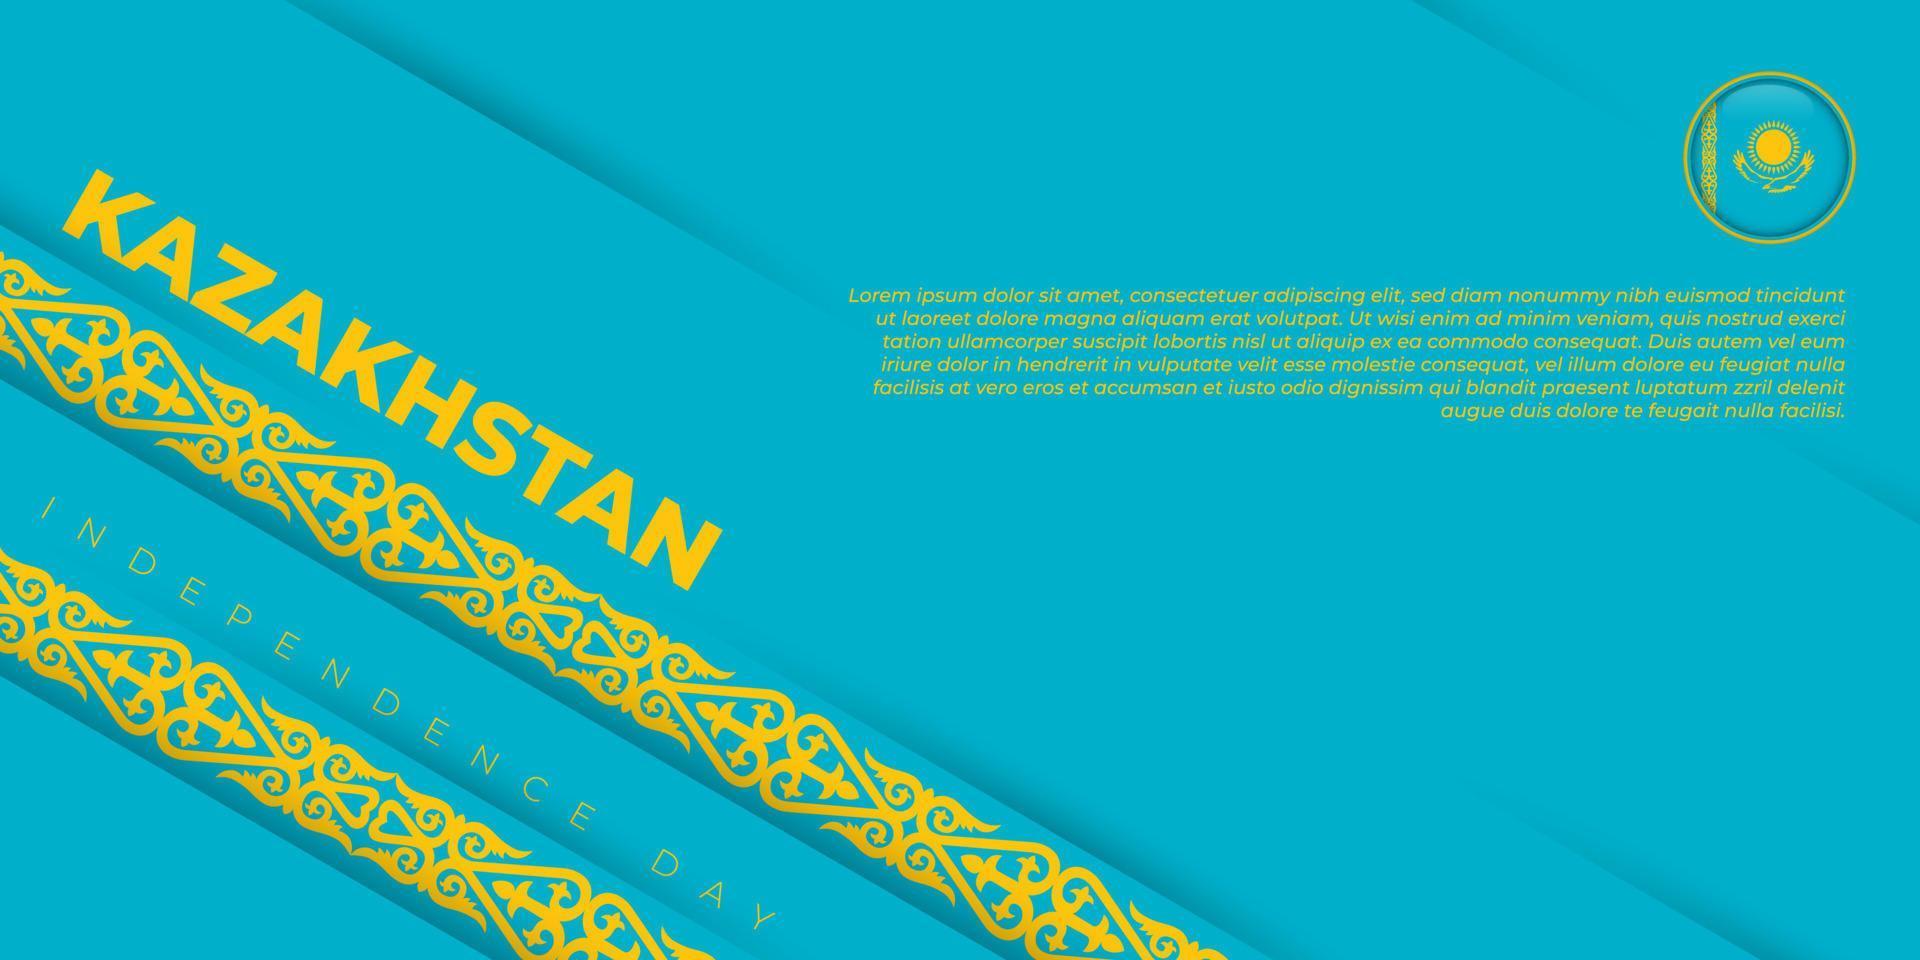 Kazakhstan background with ornament design. Kazakhstan independence day template design. vector